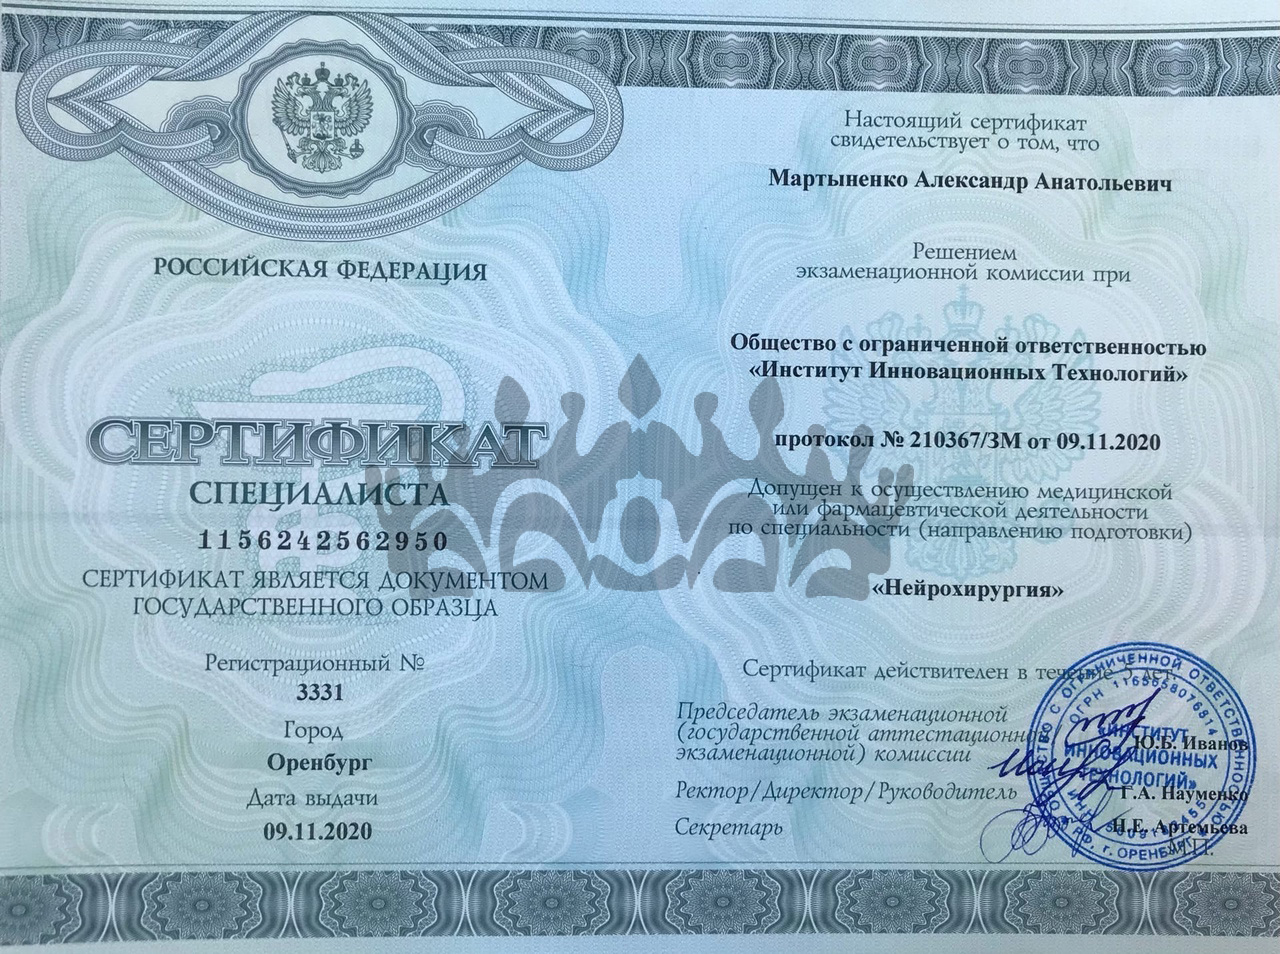 Сертификат Мартыненко А.А. - Нейрохирург 2020